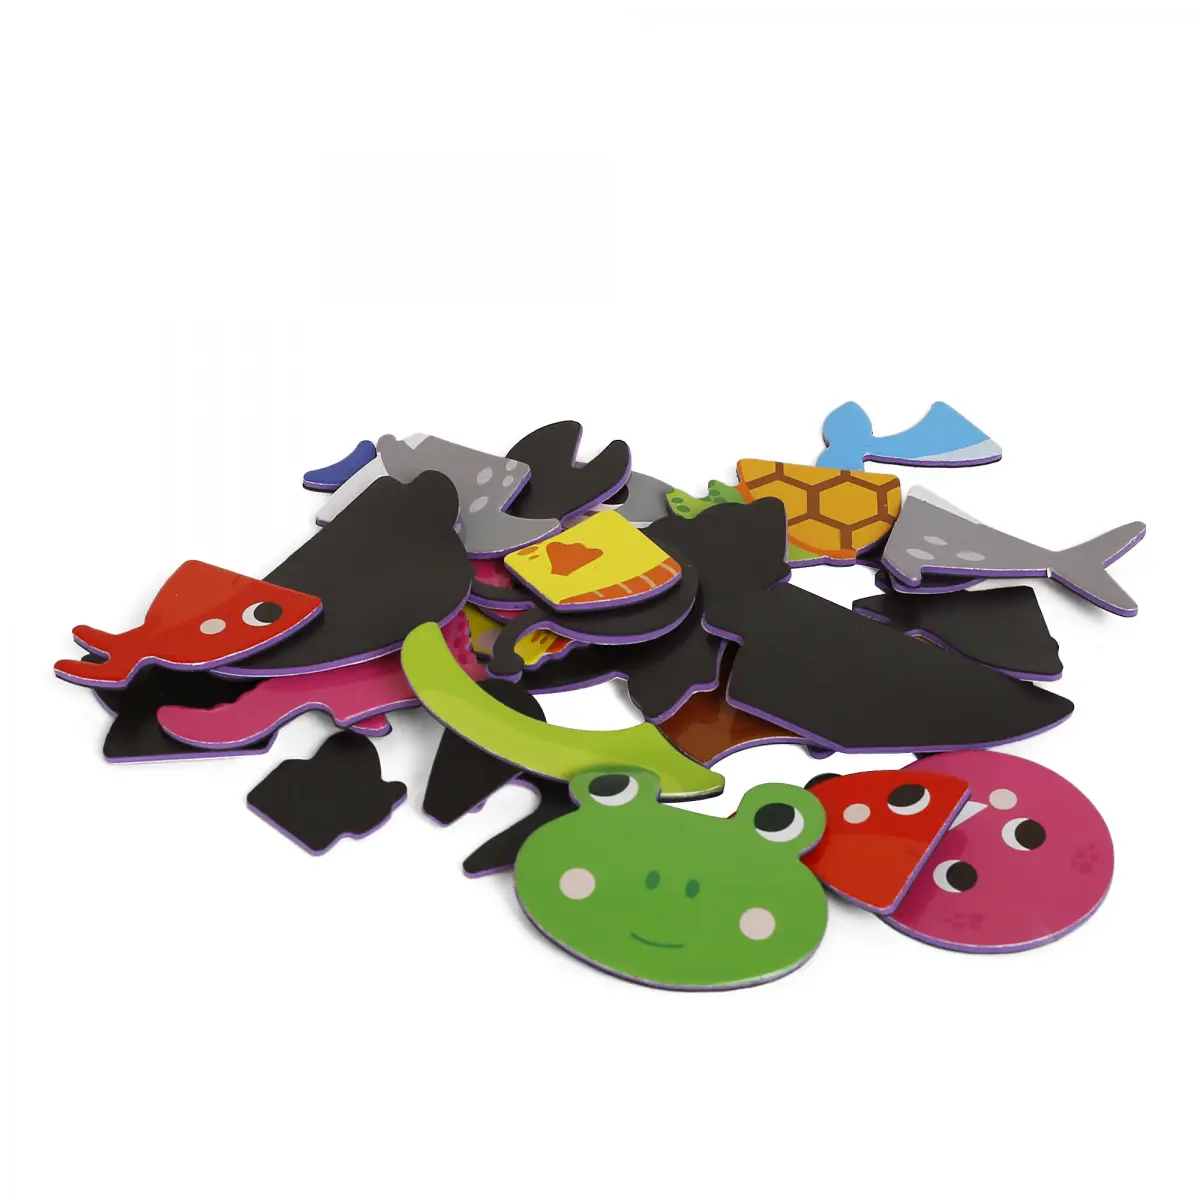 Youreka Magnetic Puzzles Aquatic Animals, 3Y+, Multicolour